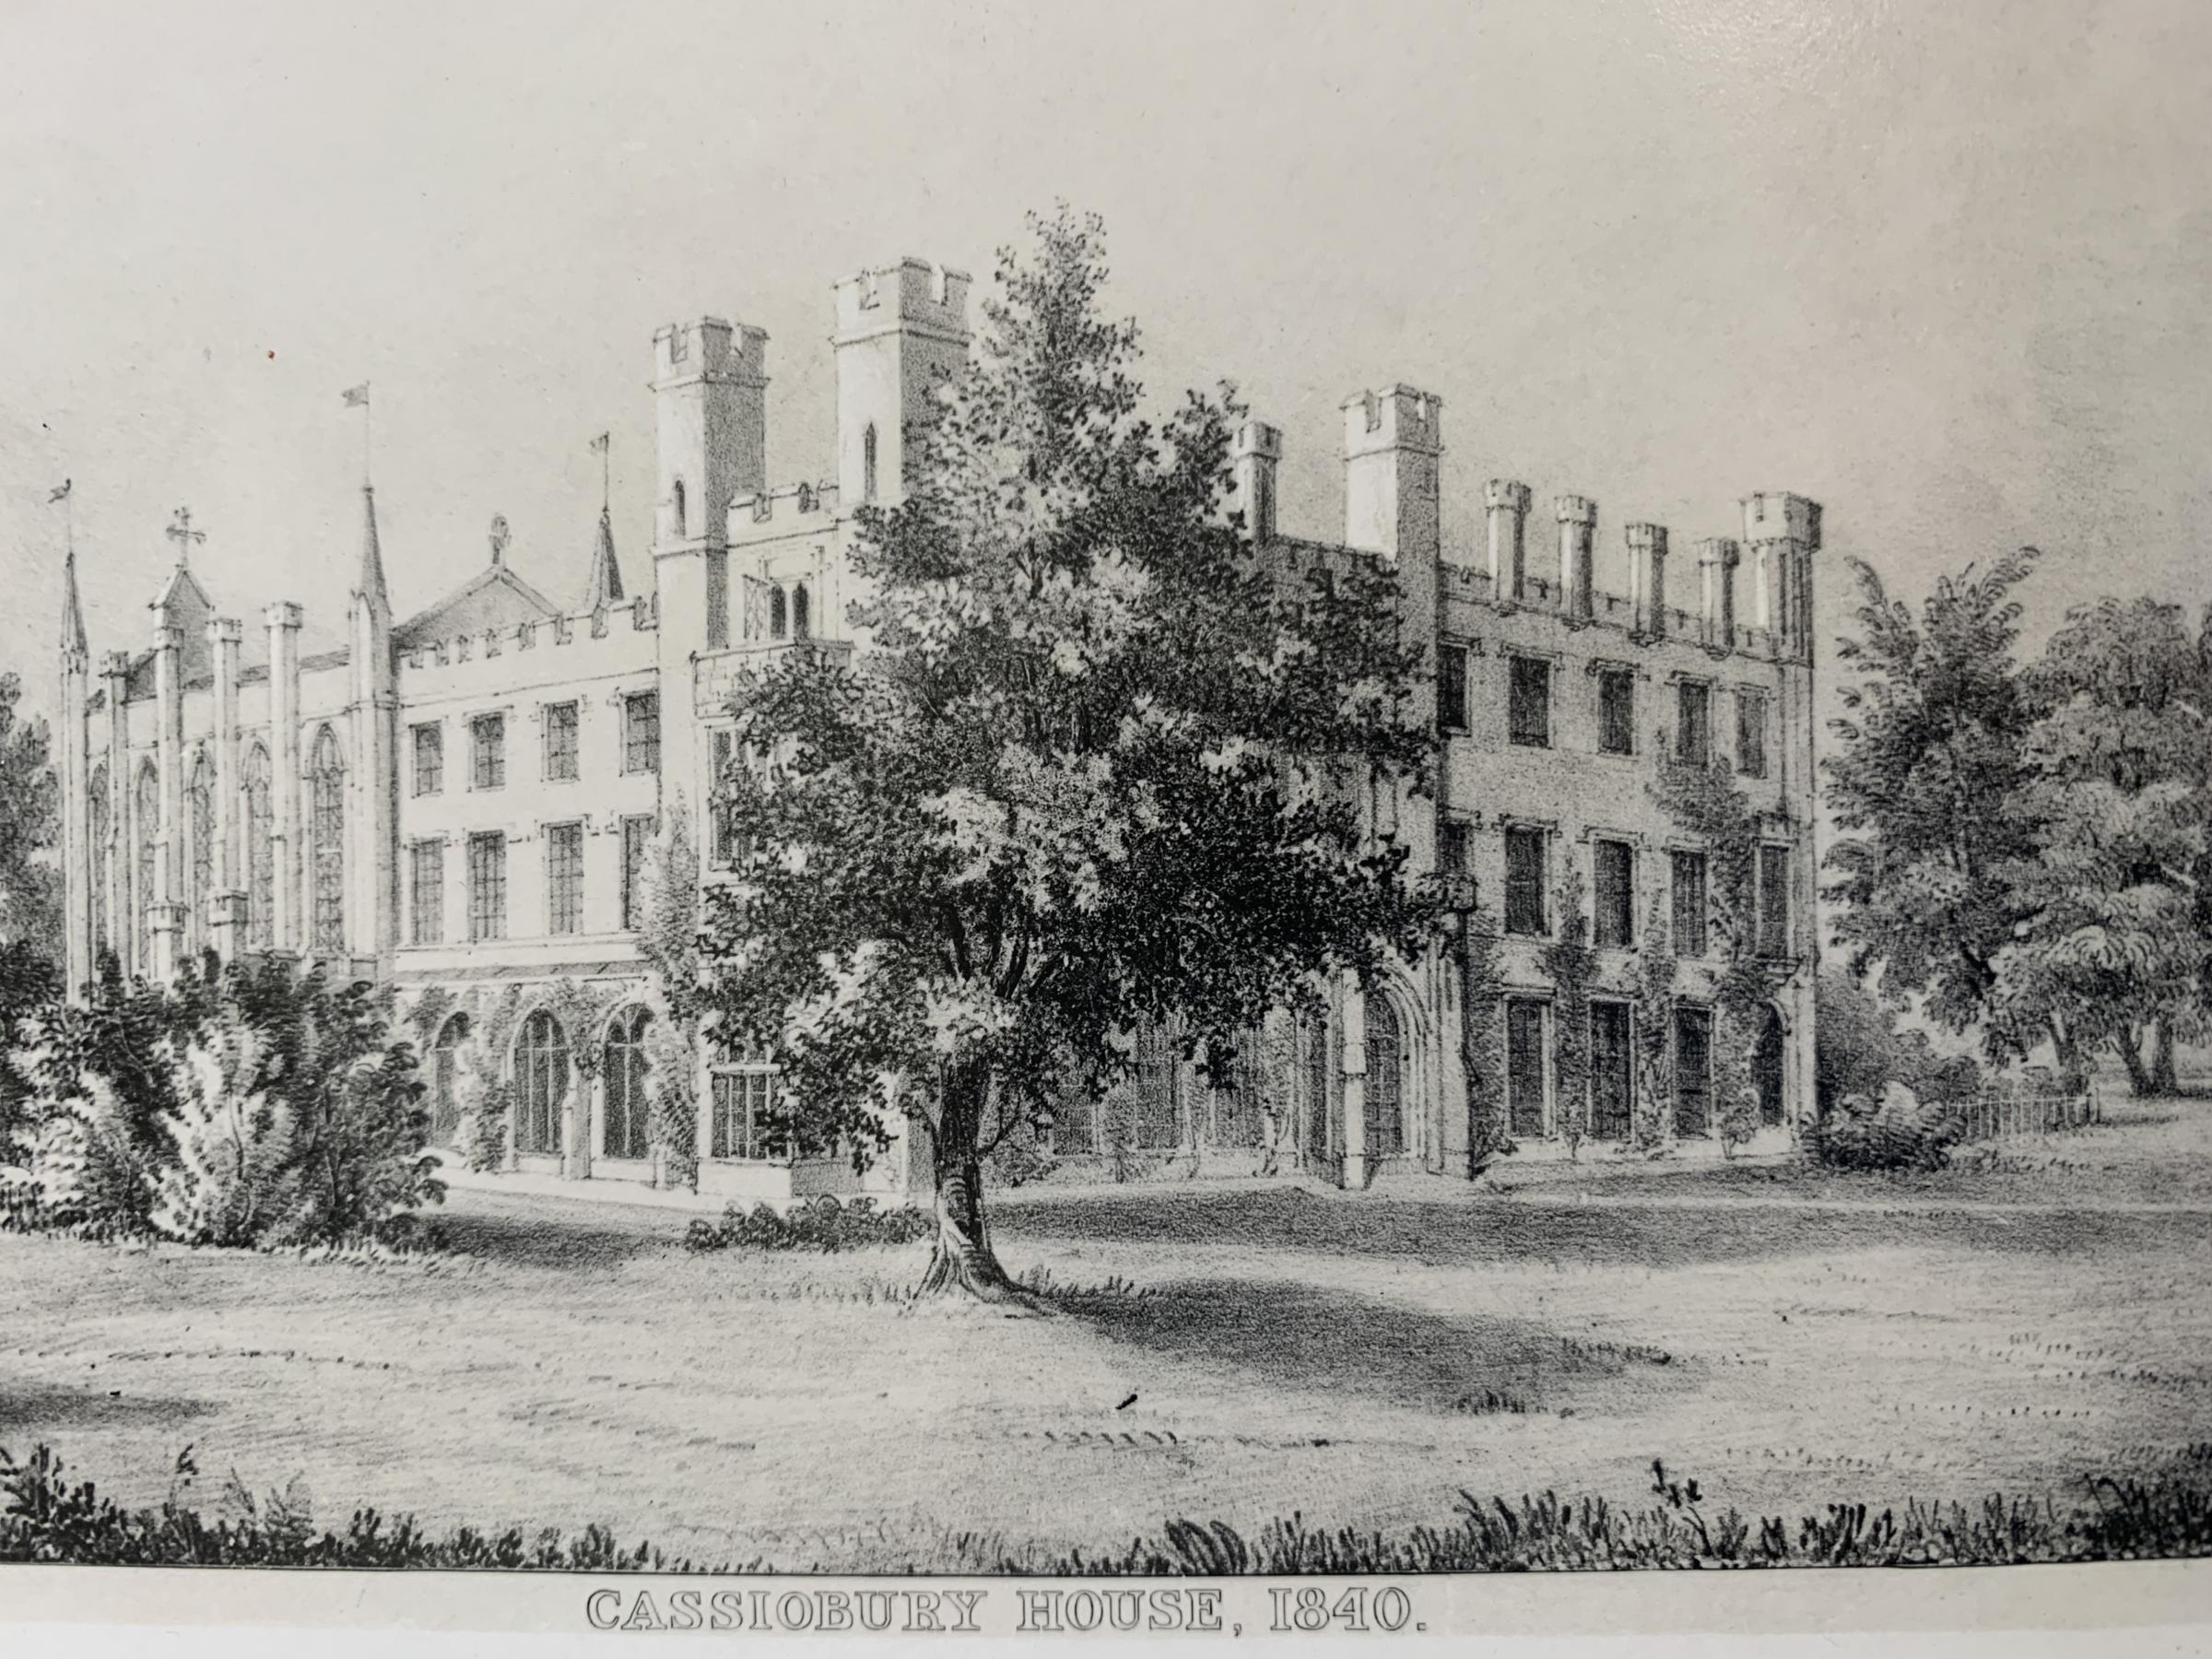 Cassiobury House 1840